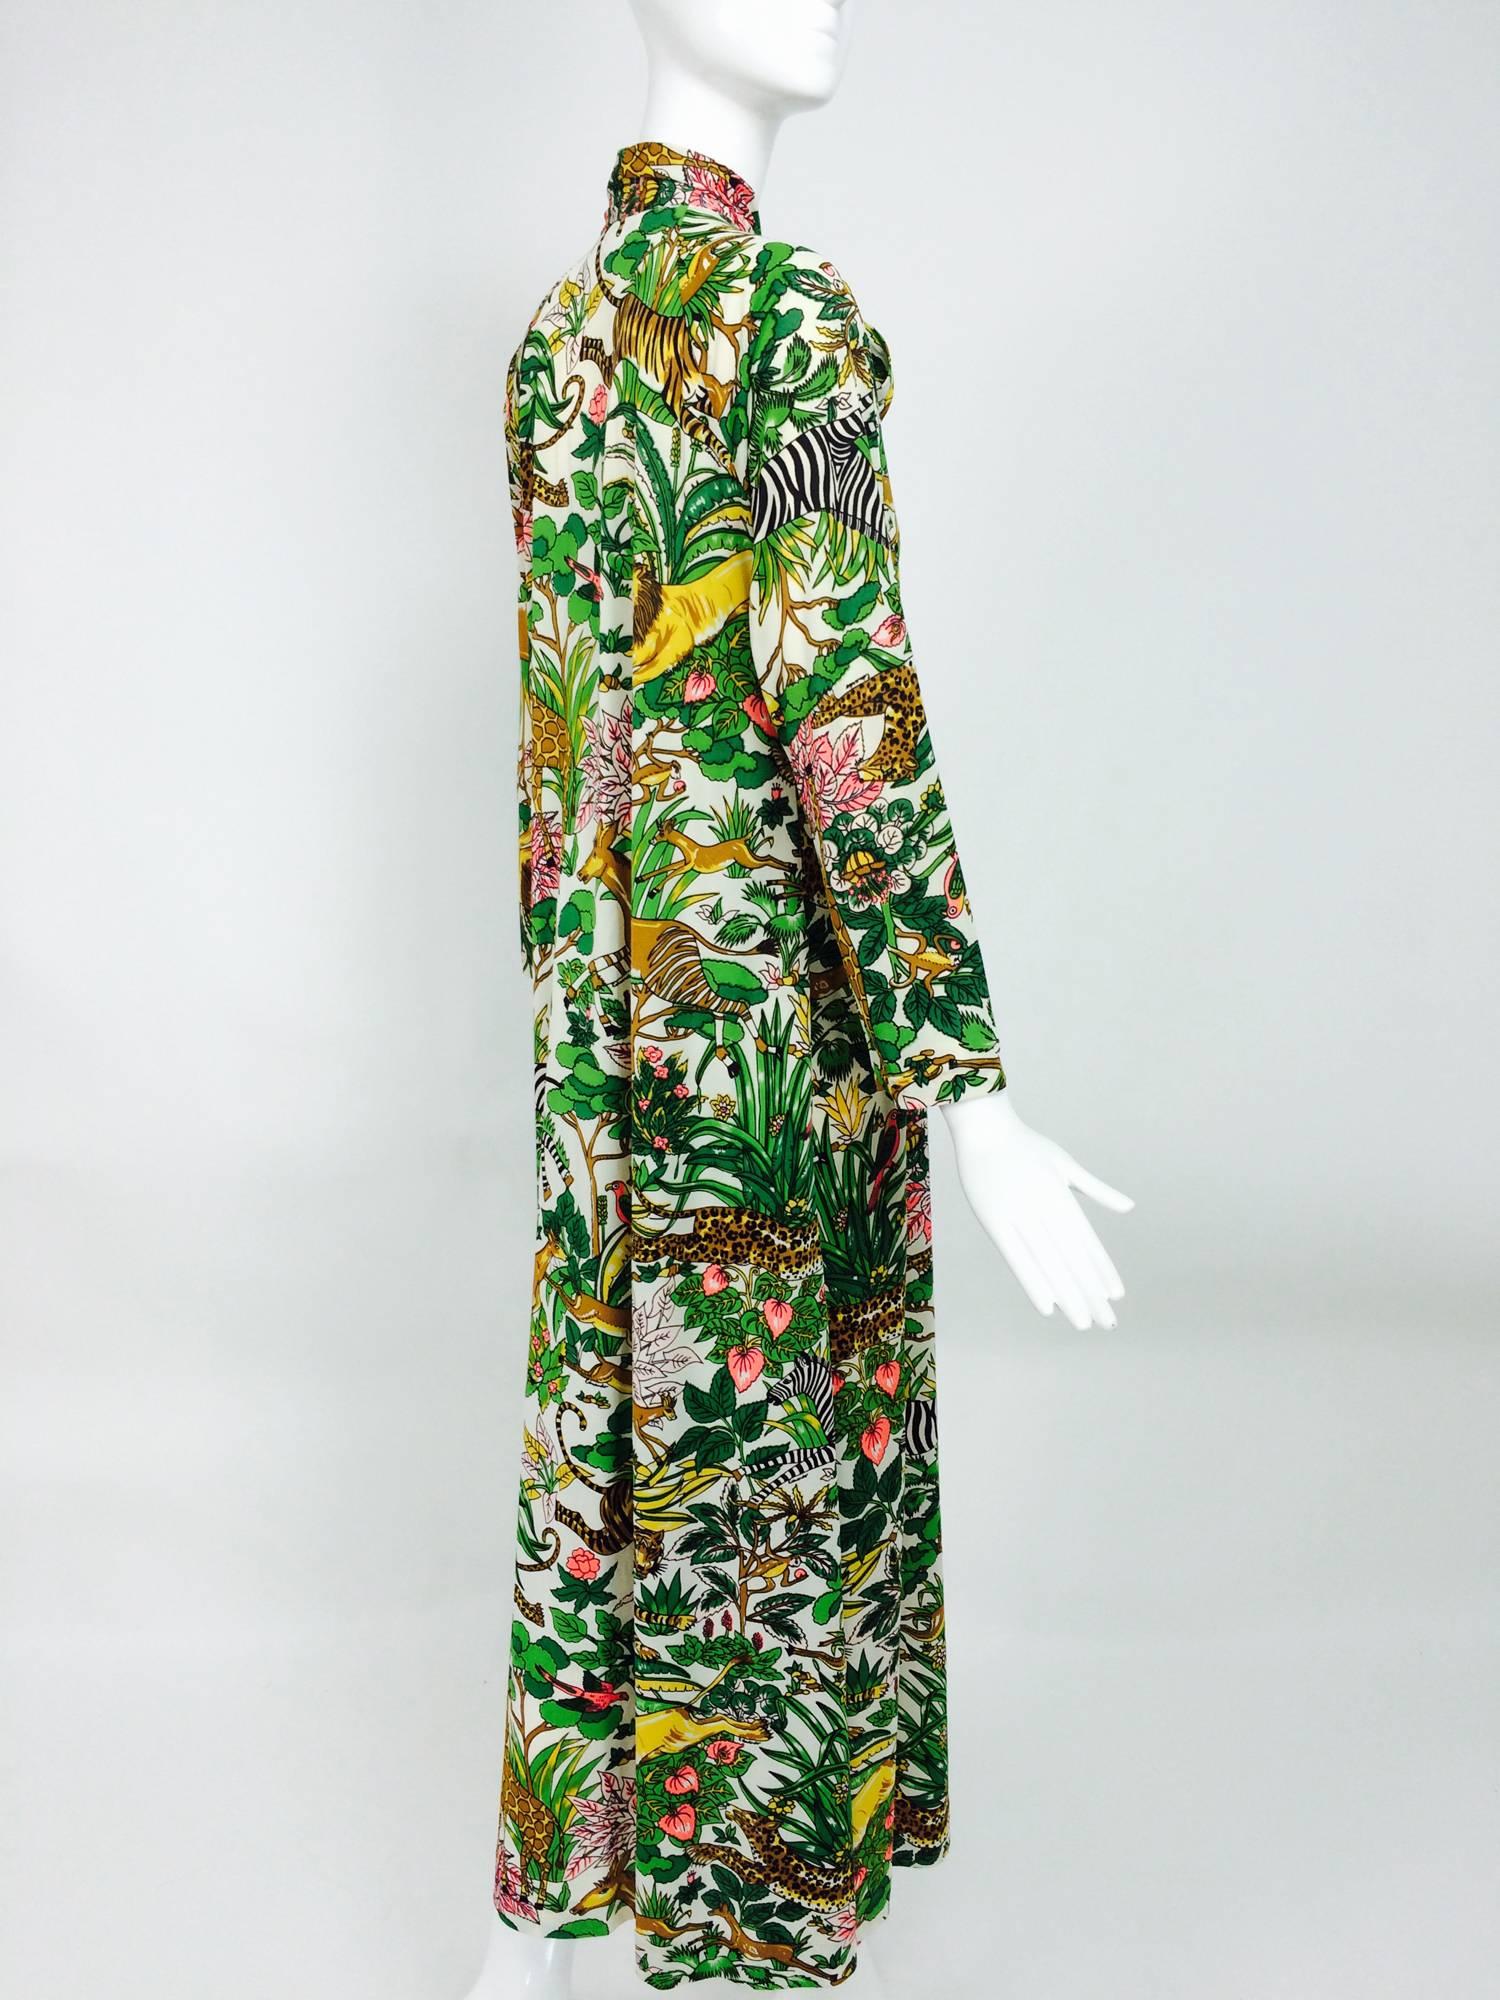 Women's Eduardo Saks 5th Ave. jungle print bow tie lounge caftan maxi dress1970s